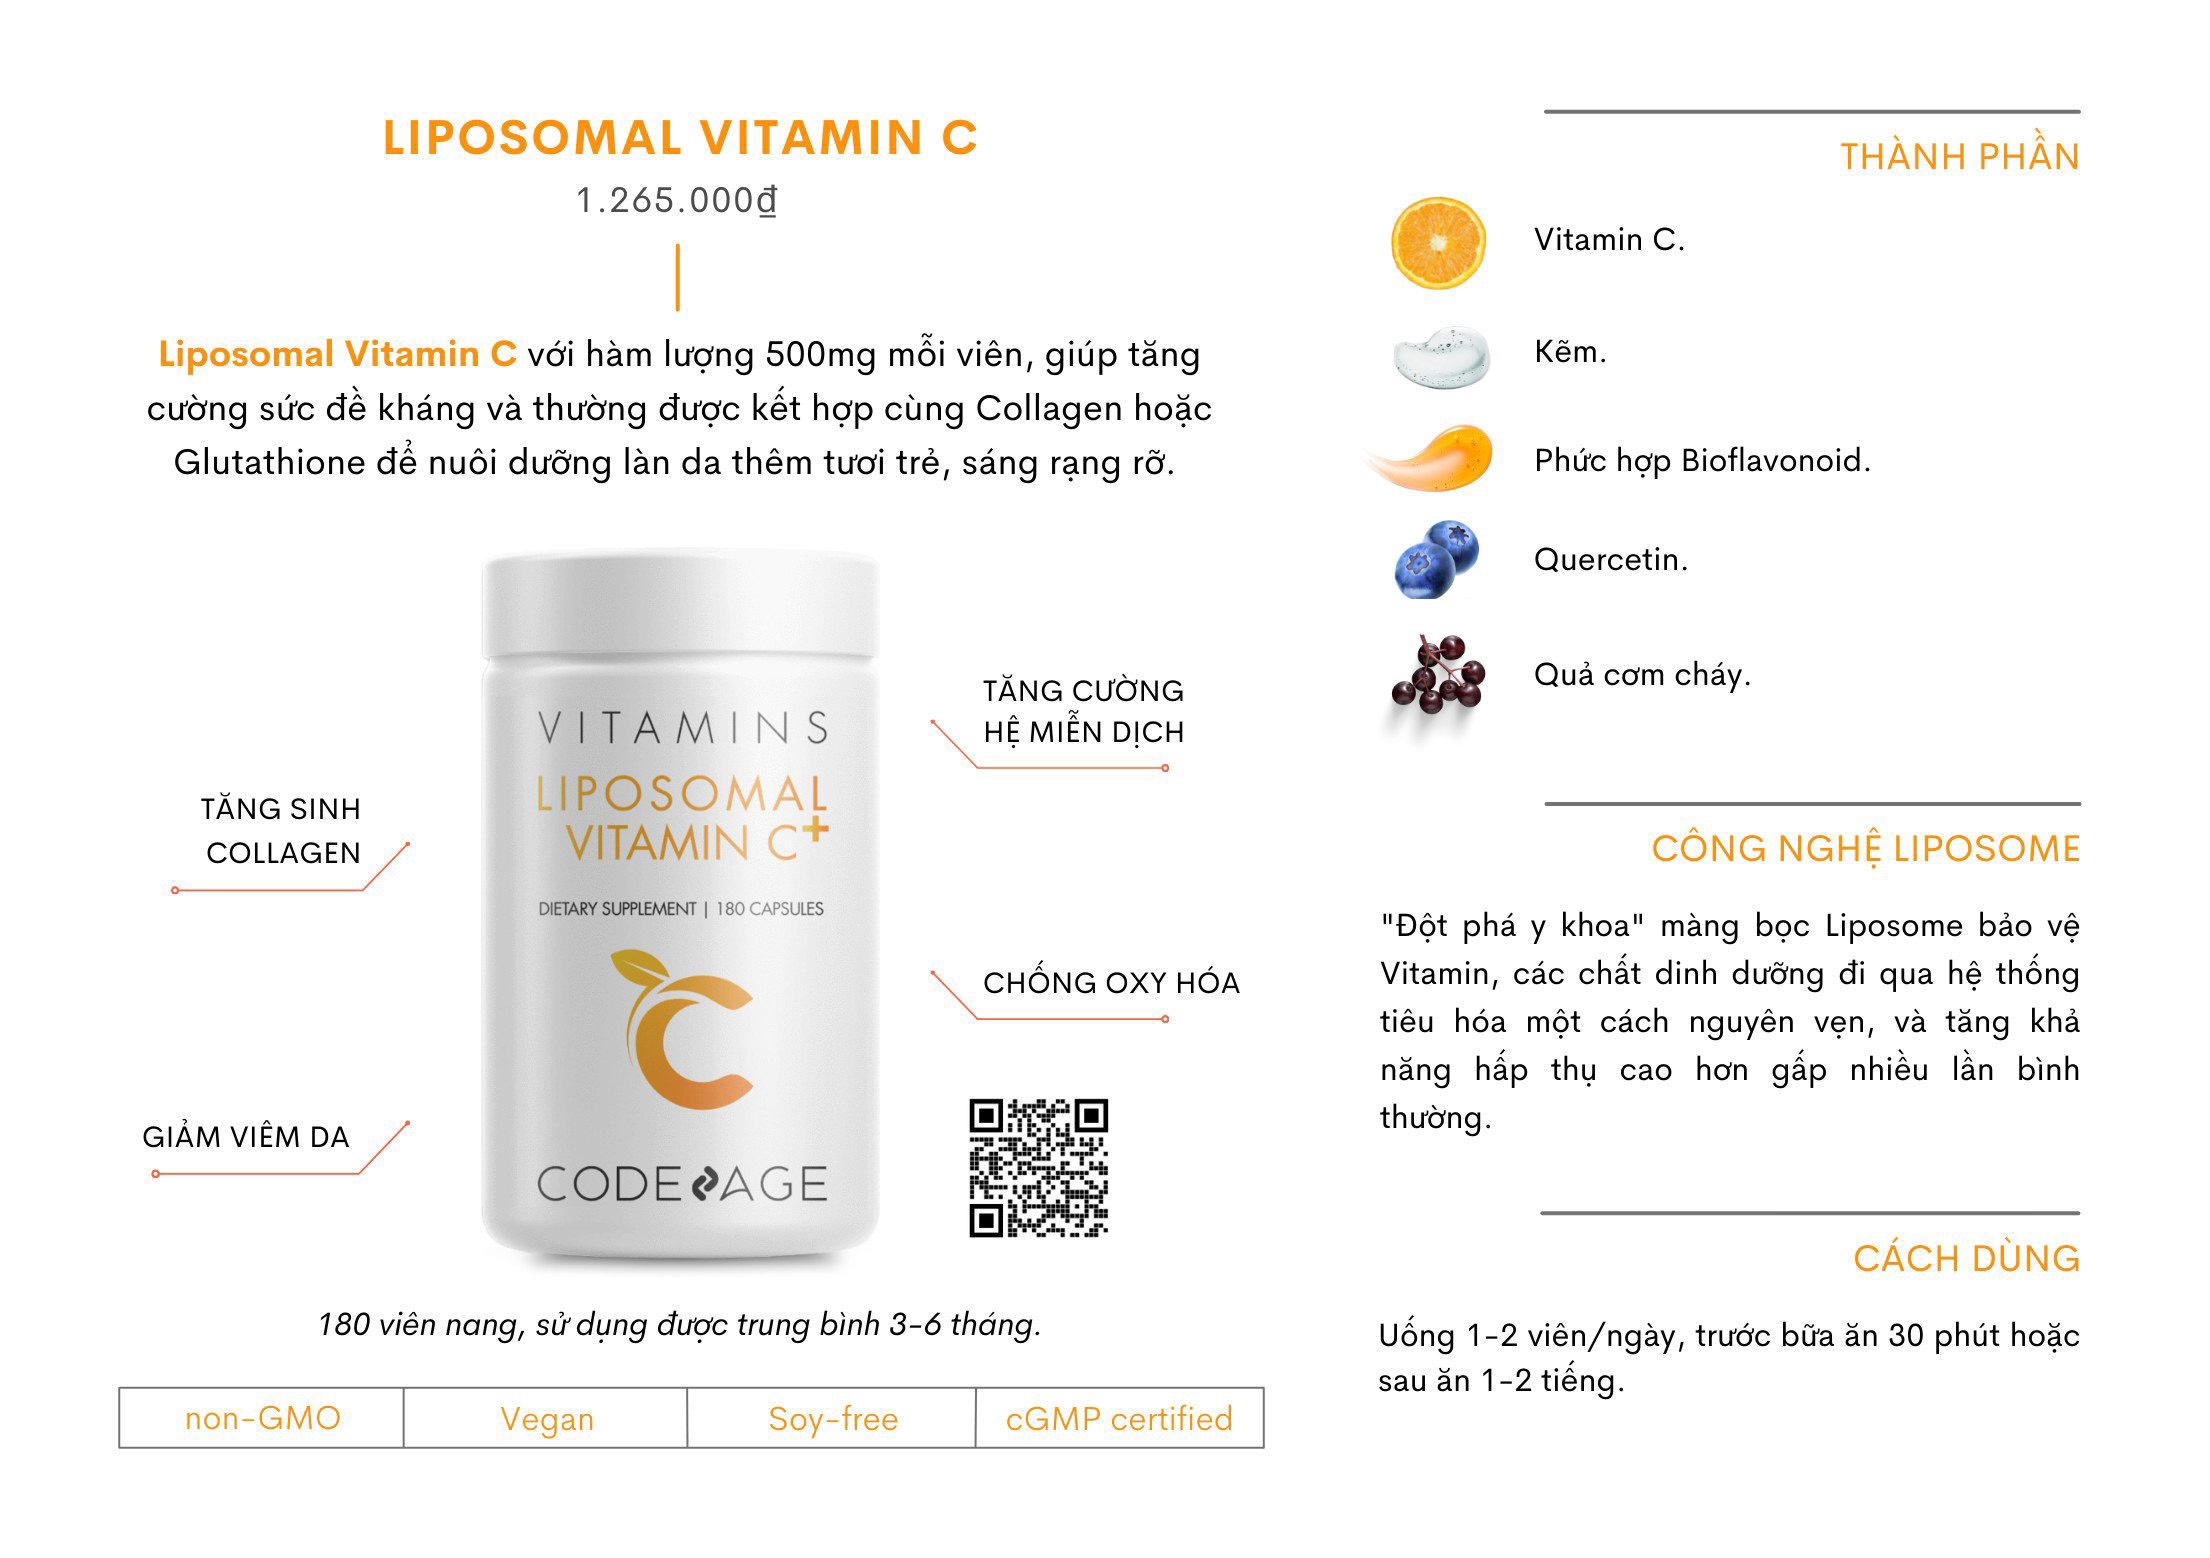 Codeage Liposomal Vitamin C